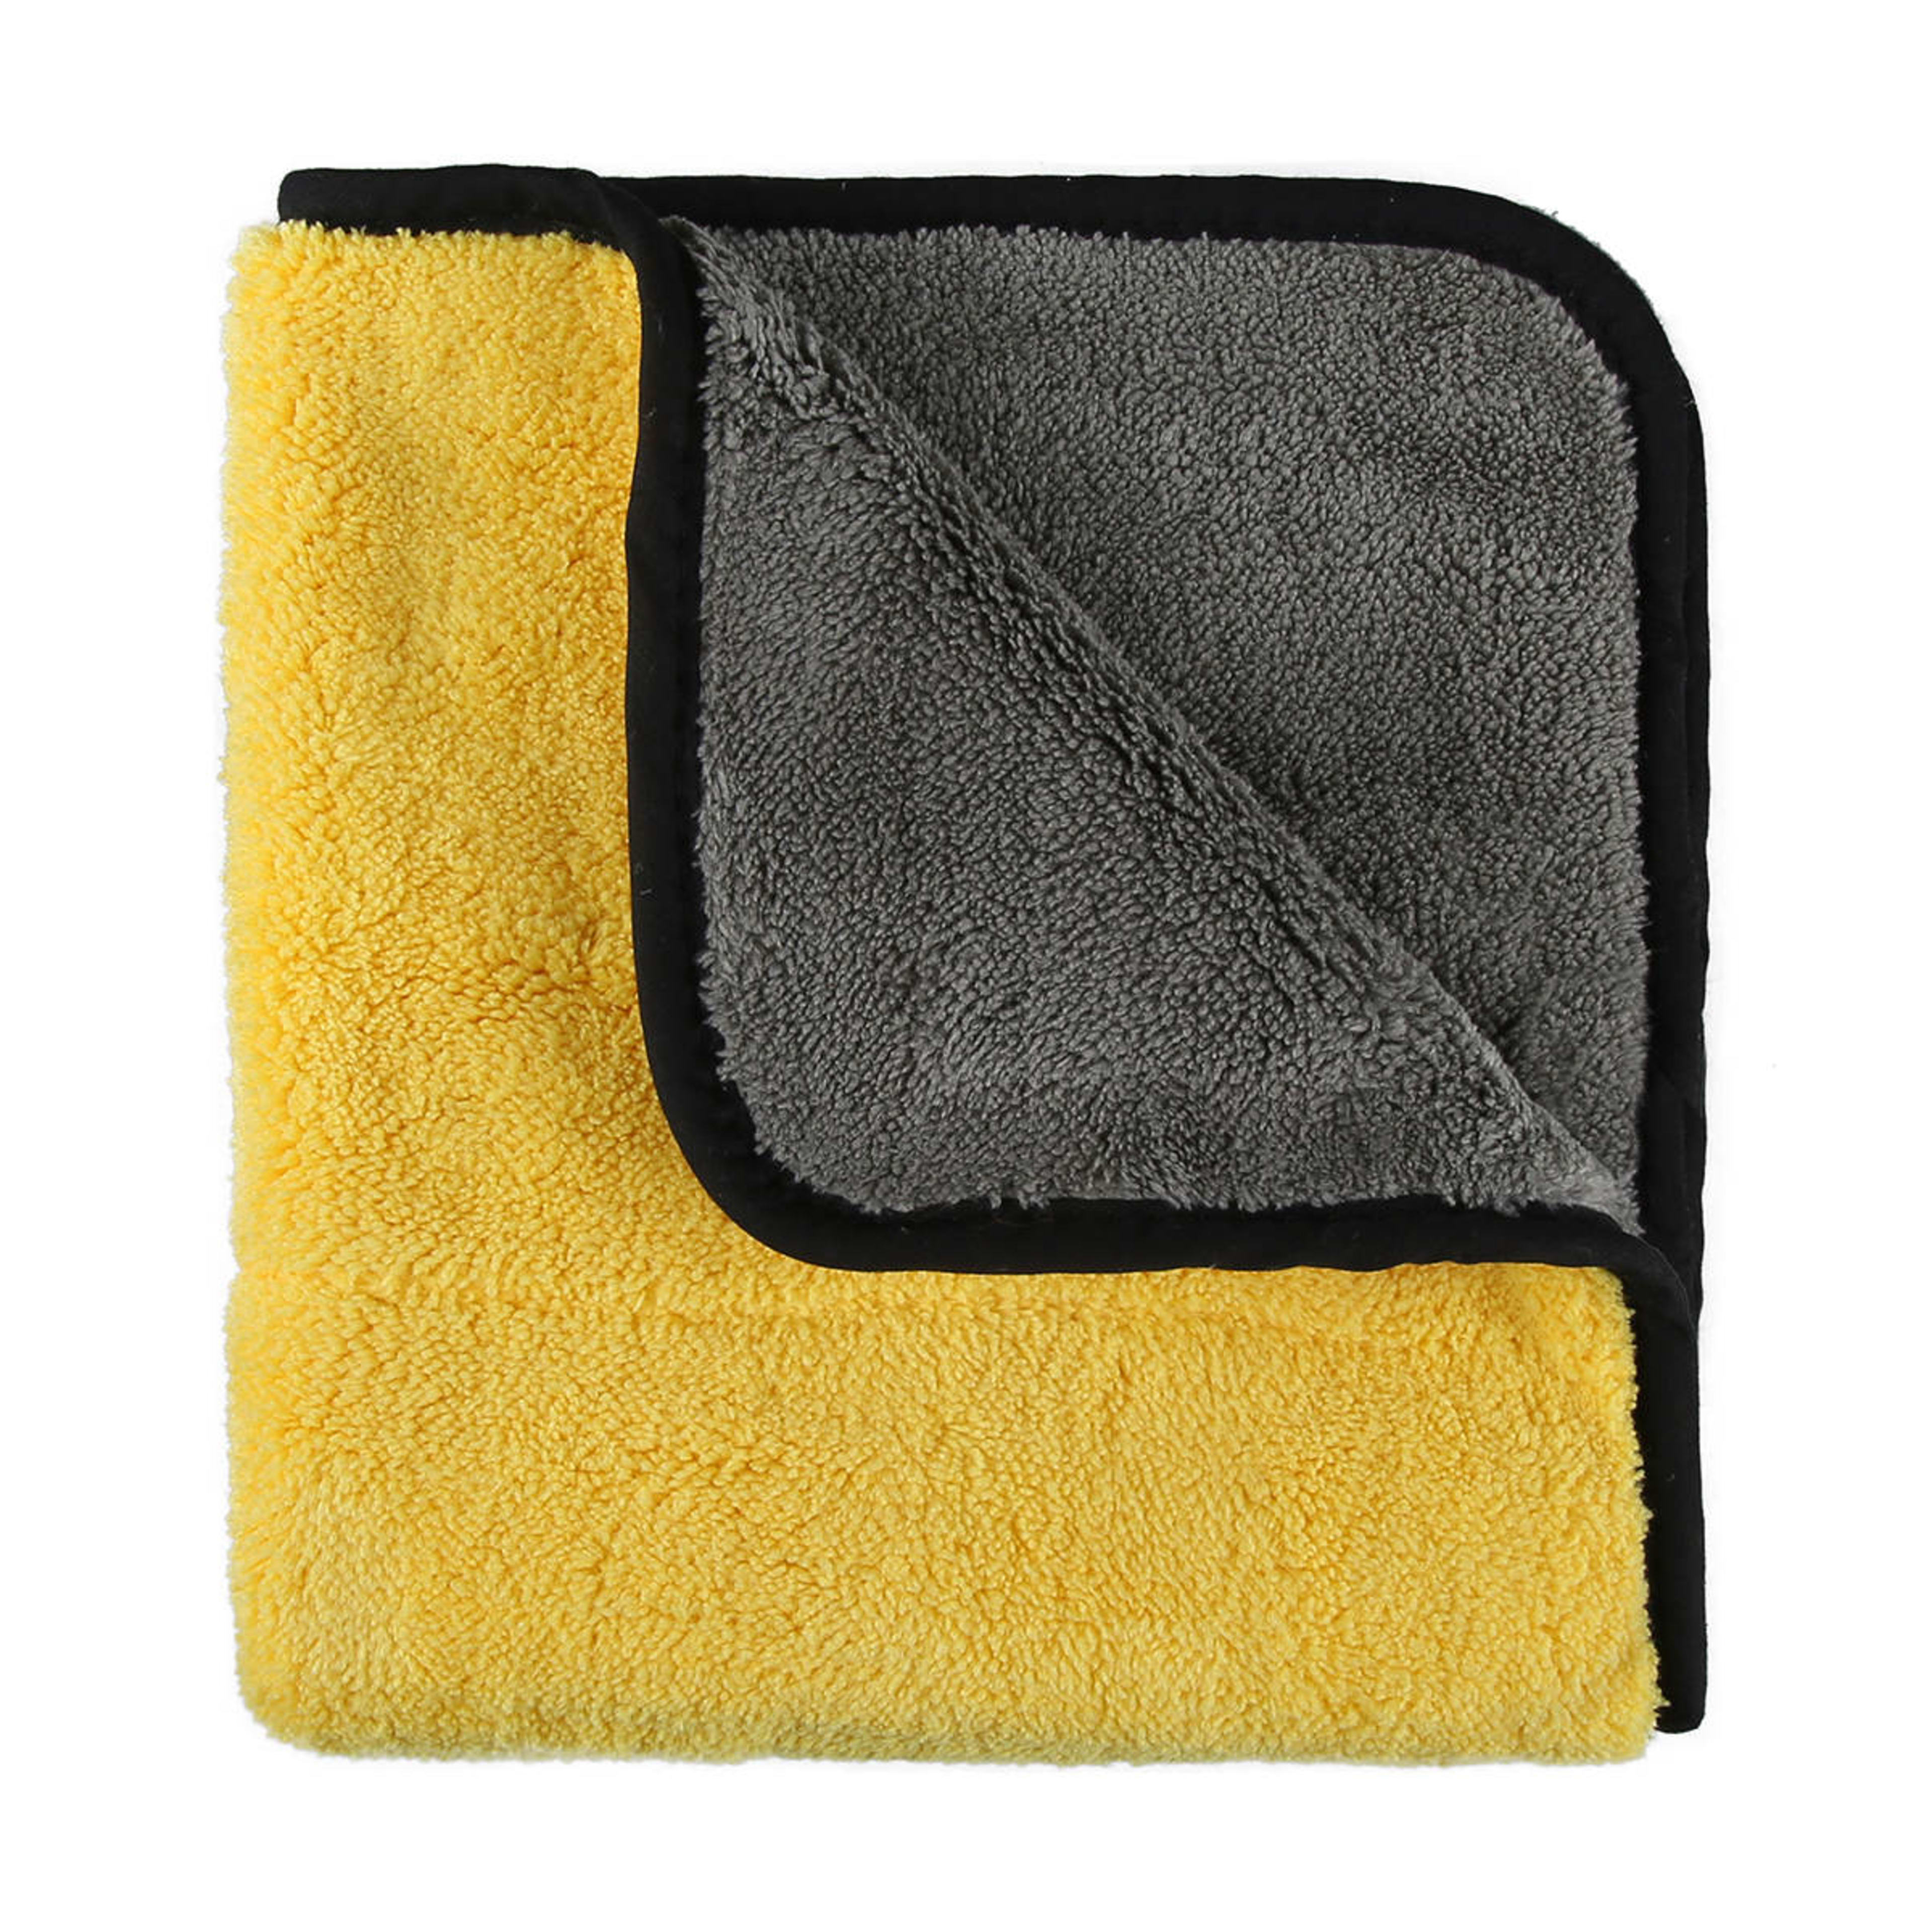 Detailing Towel - Kmart